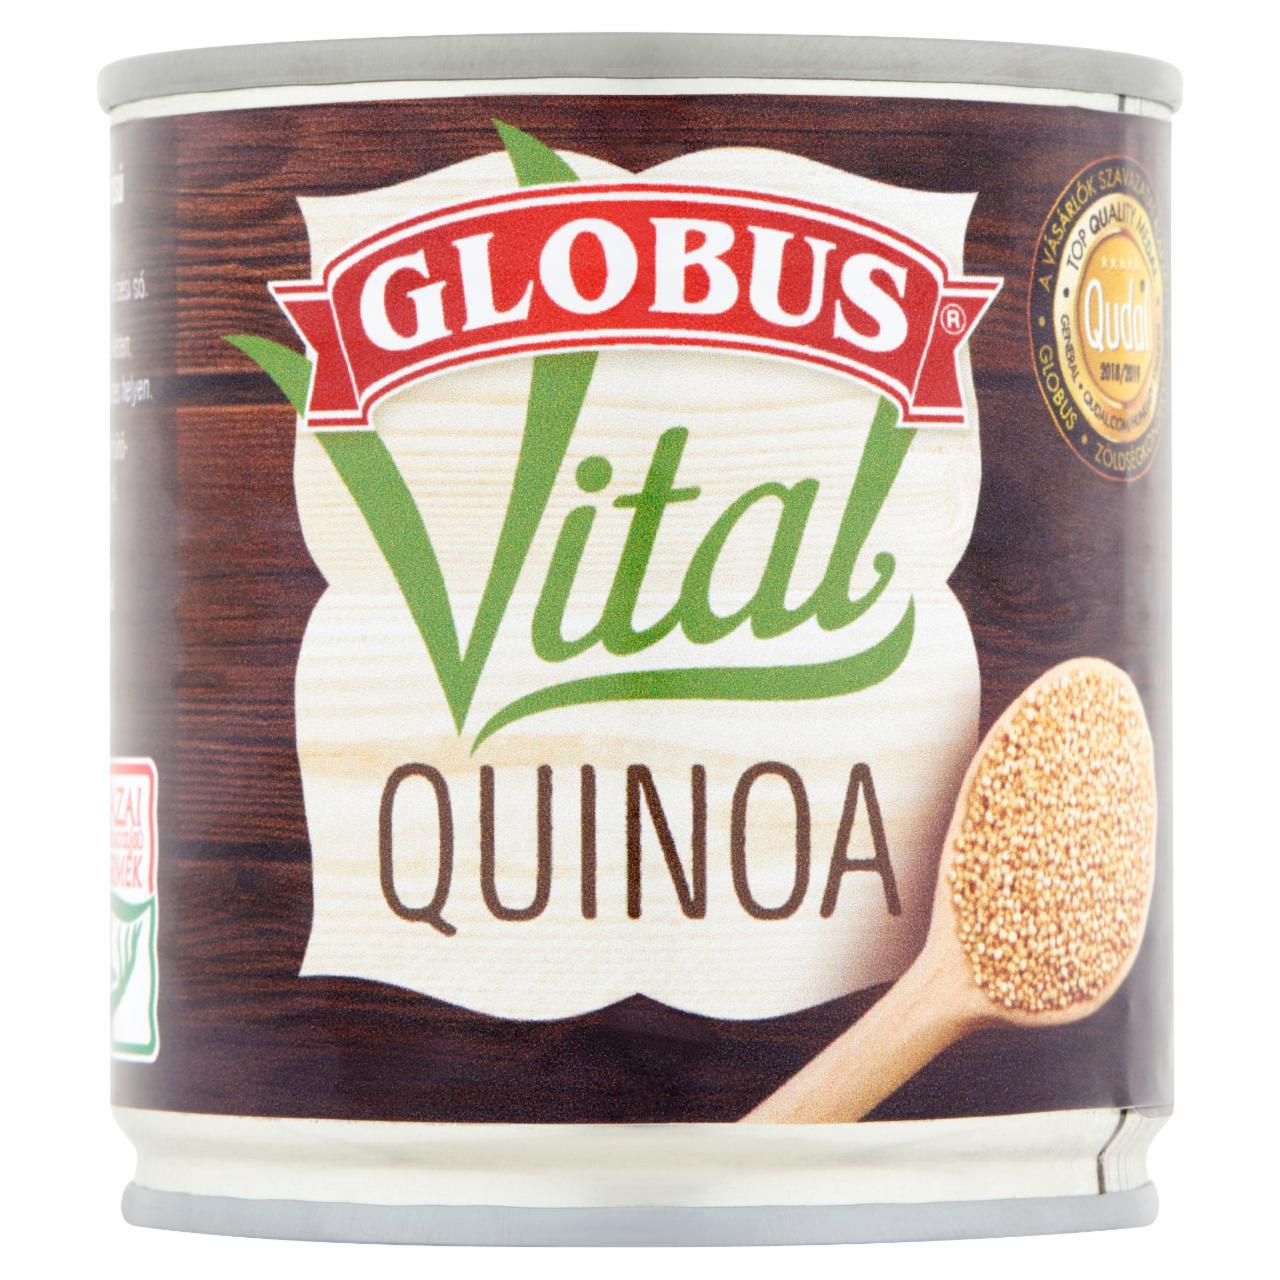 Képek - Vital quinoa Globus